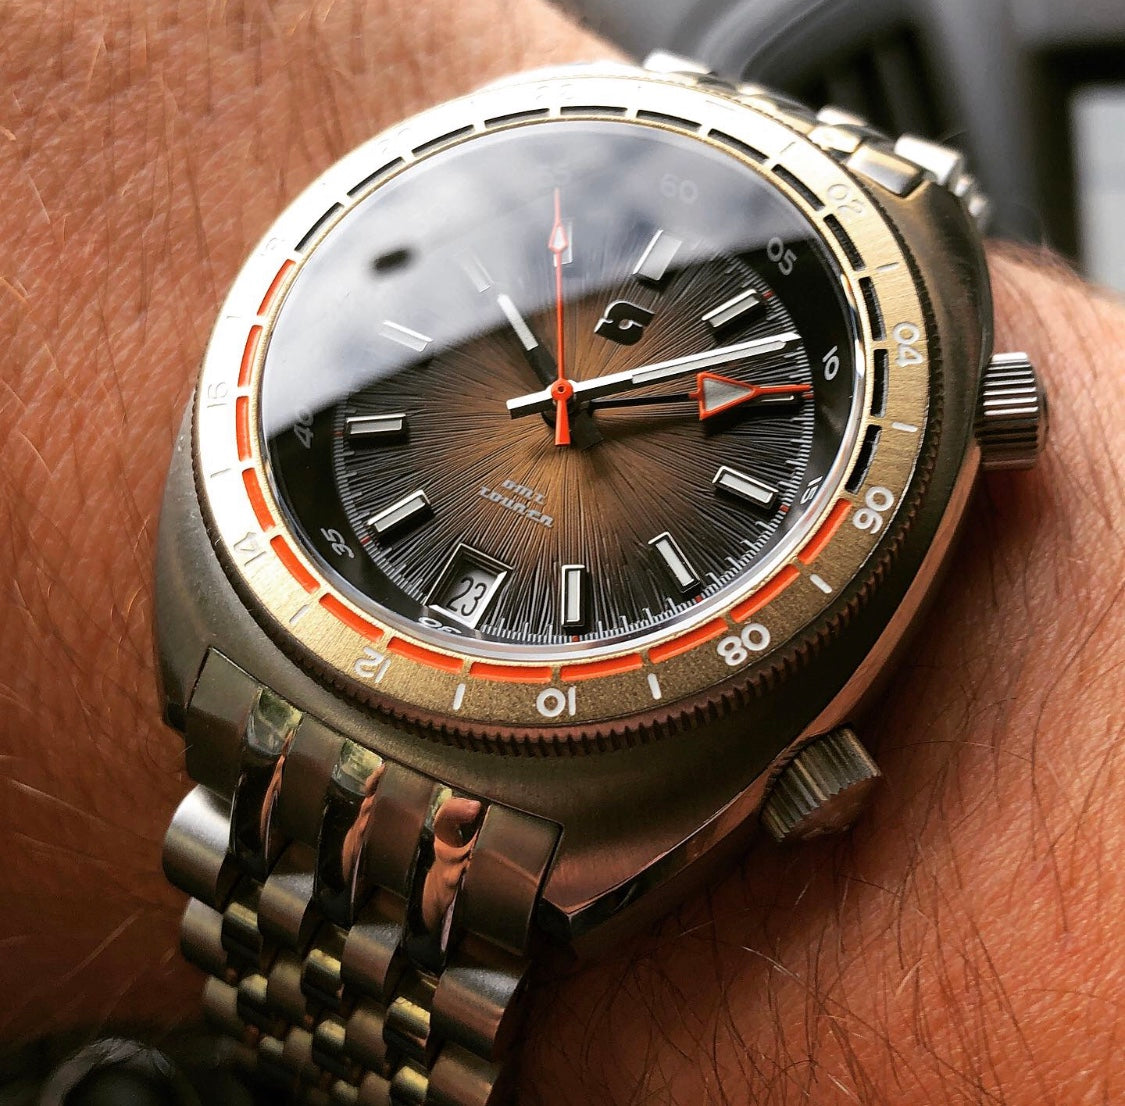 Tourer/GMT - Straton Watch Company